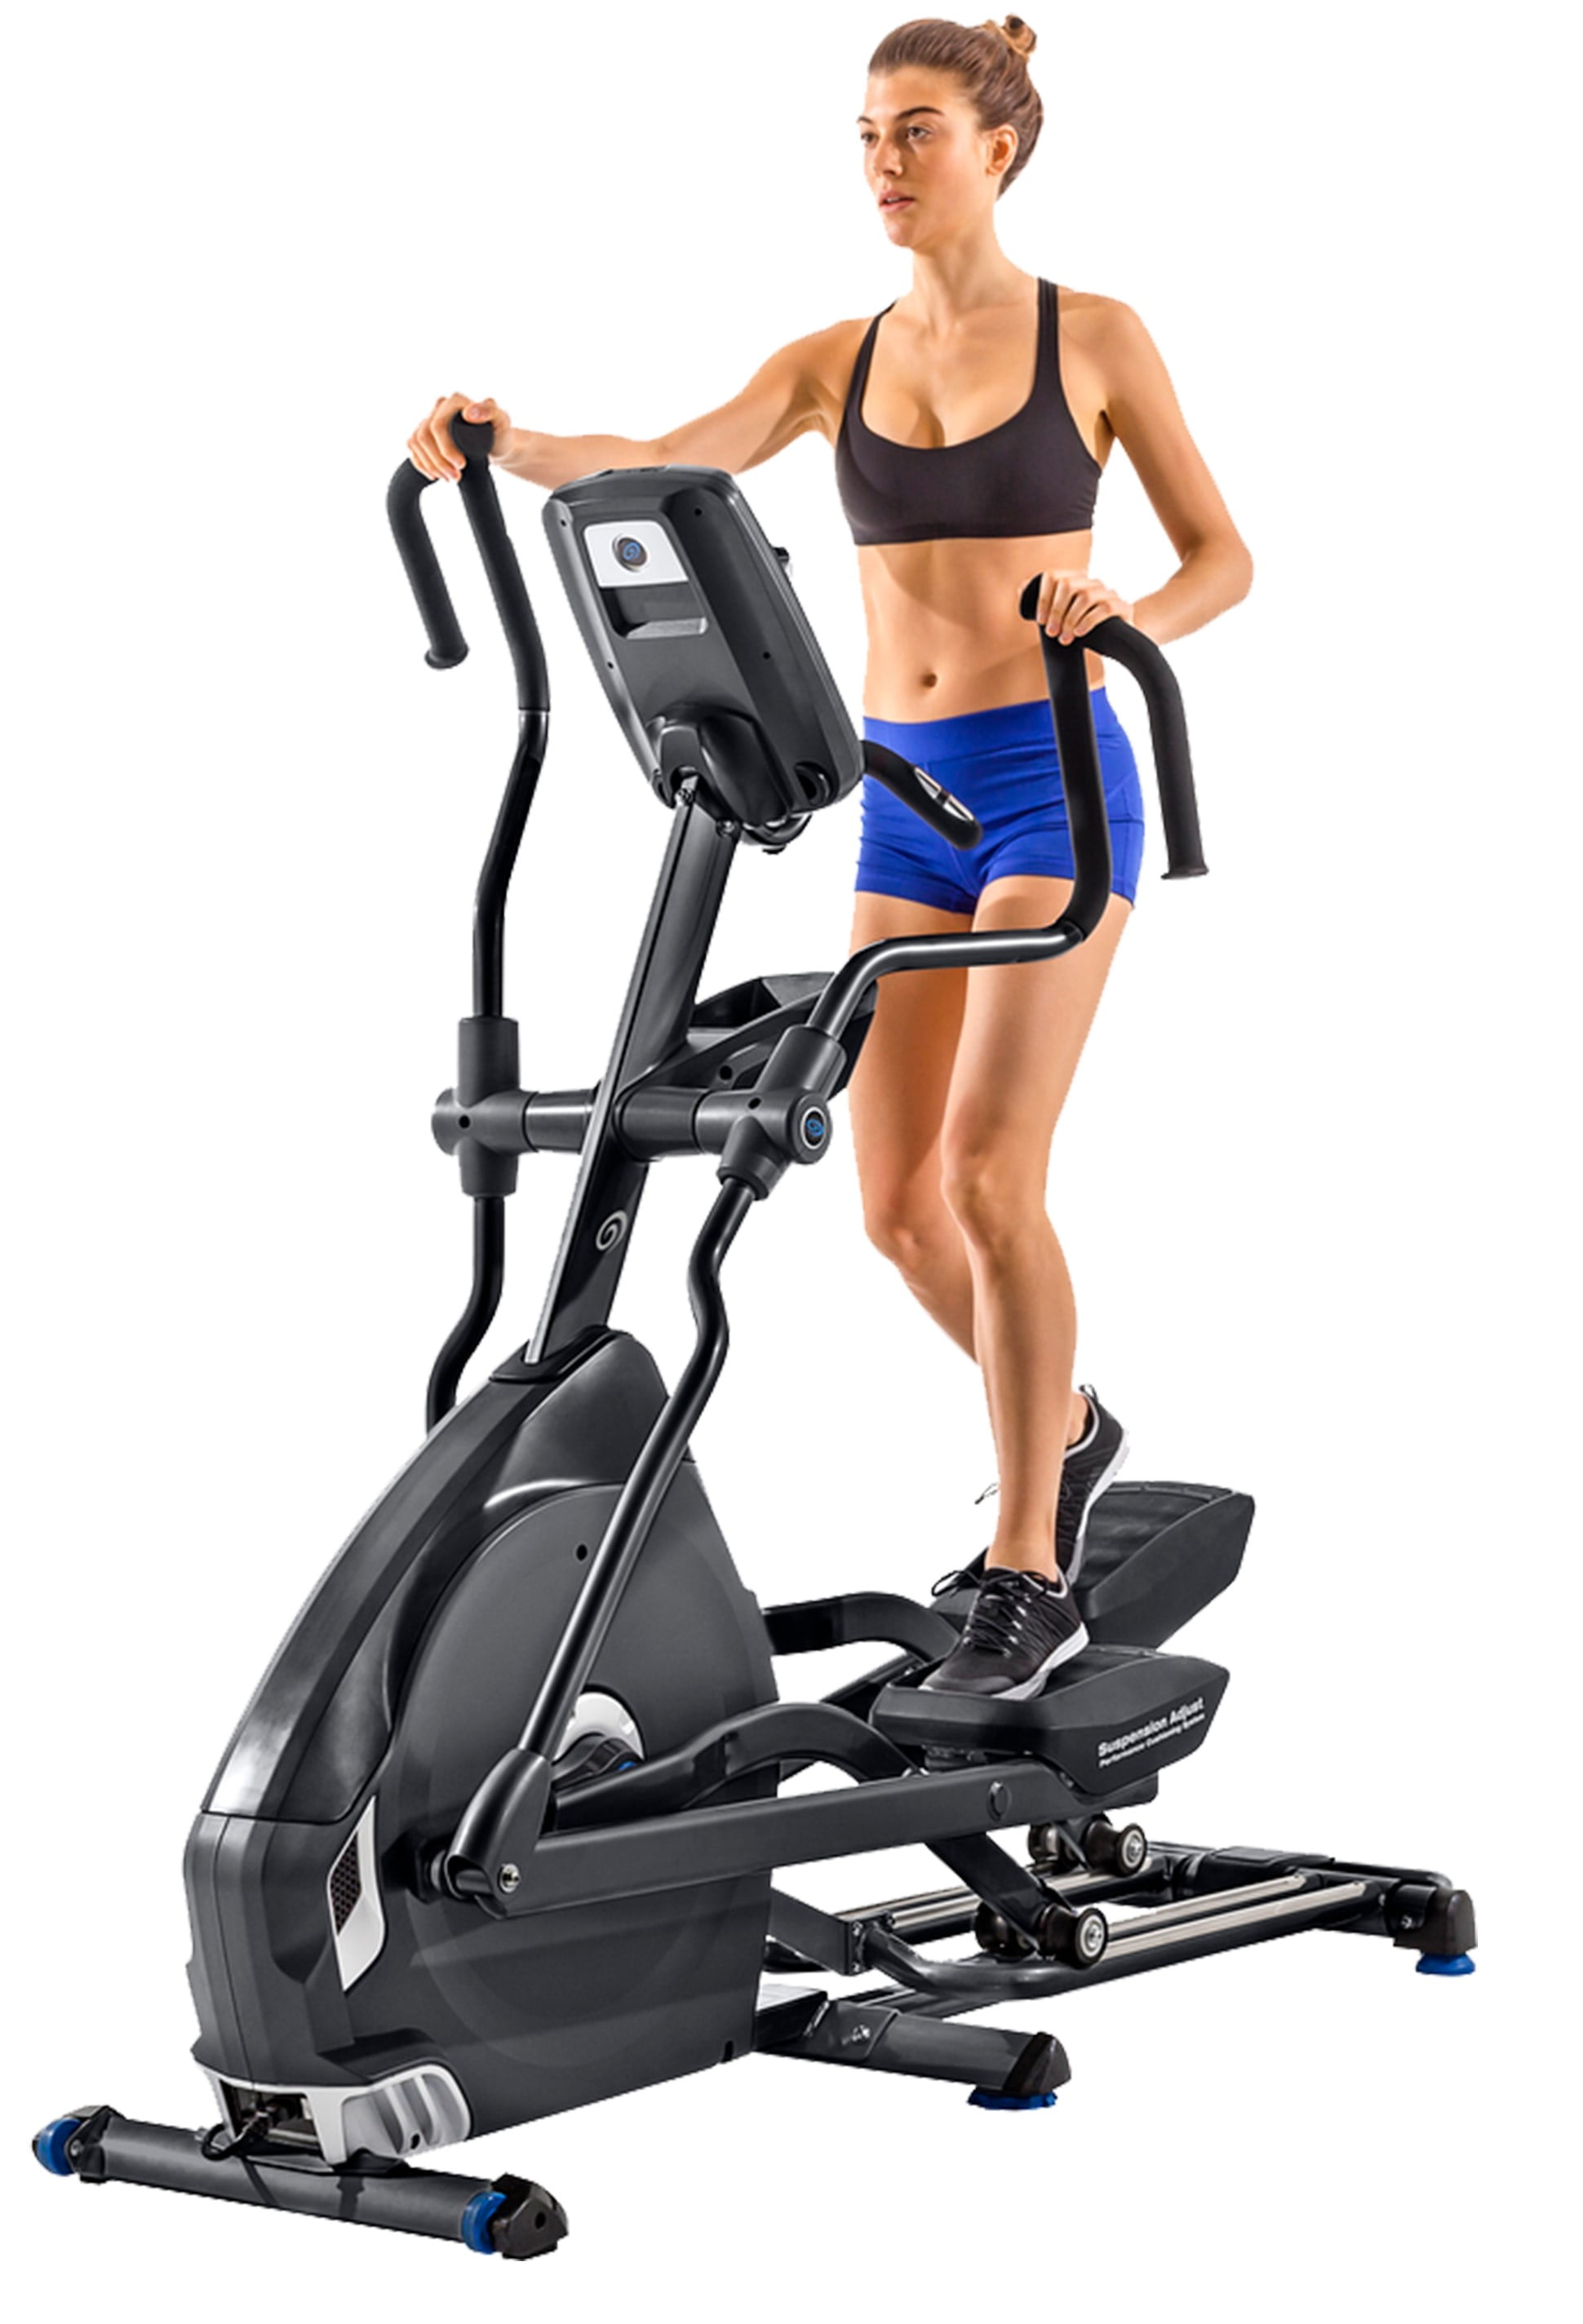 Nautilus E618 Performance Series Home Workout Cardio Elliptical Trainer for sale online